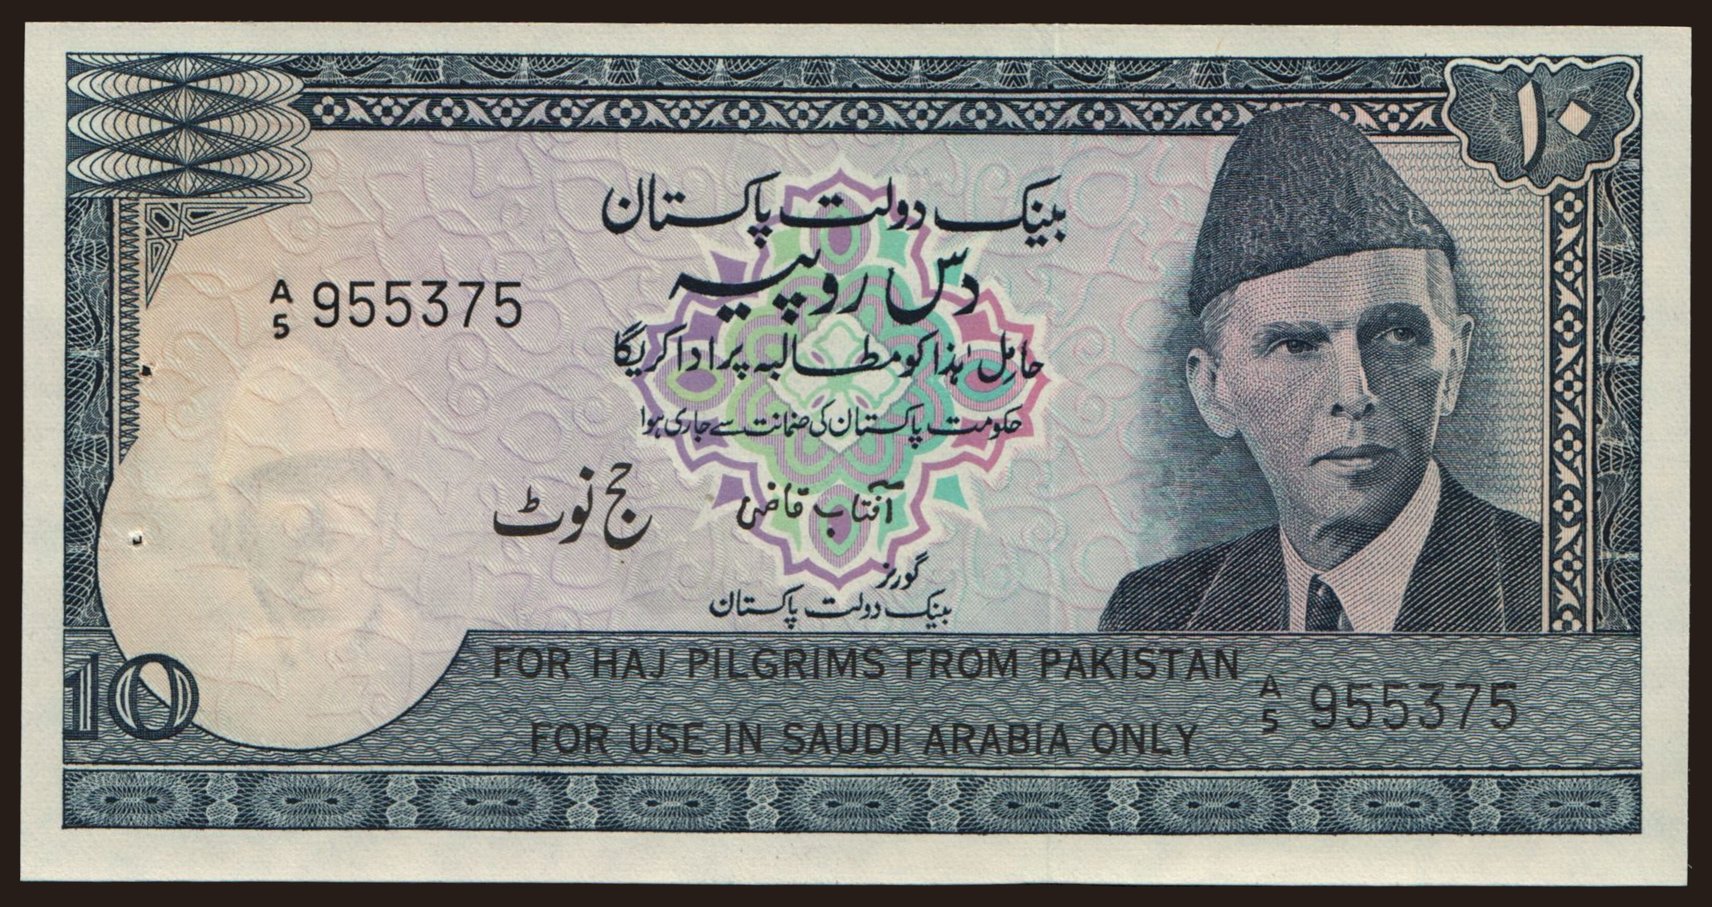 10 rupees, 1978, Haj pilgrims